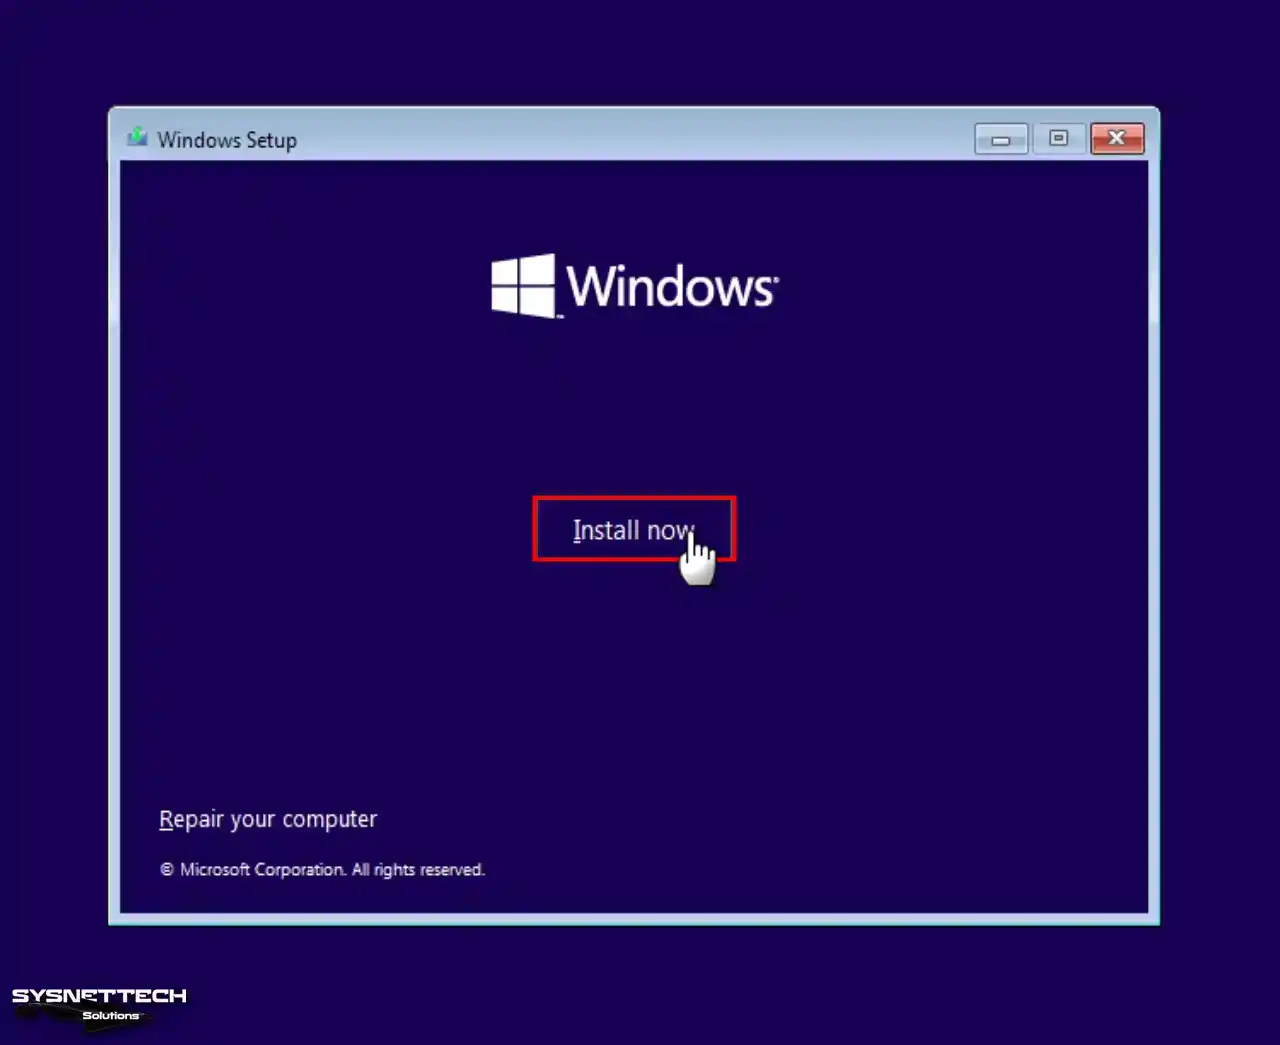 Install Windows 10 Now